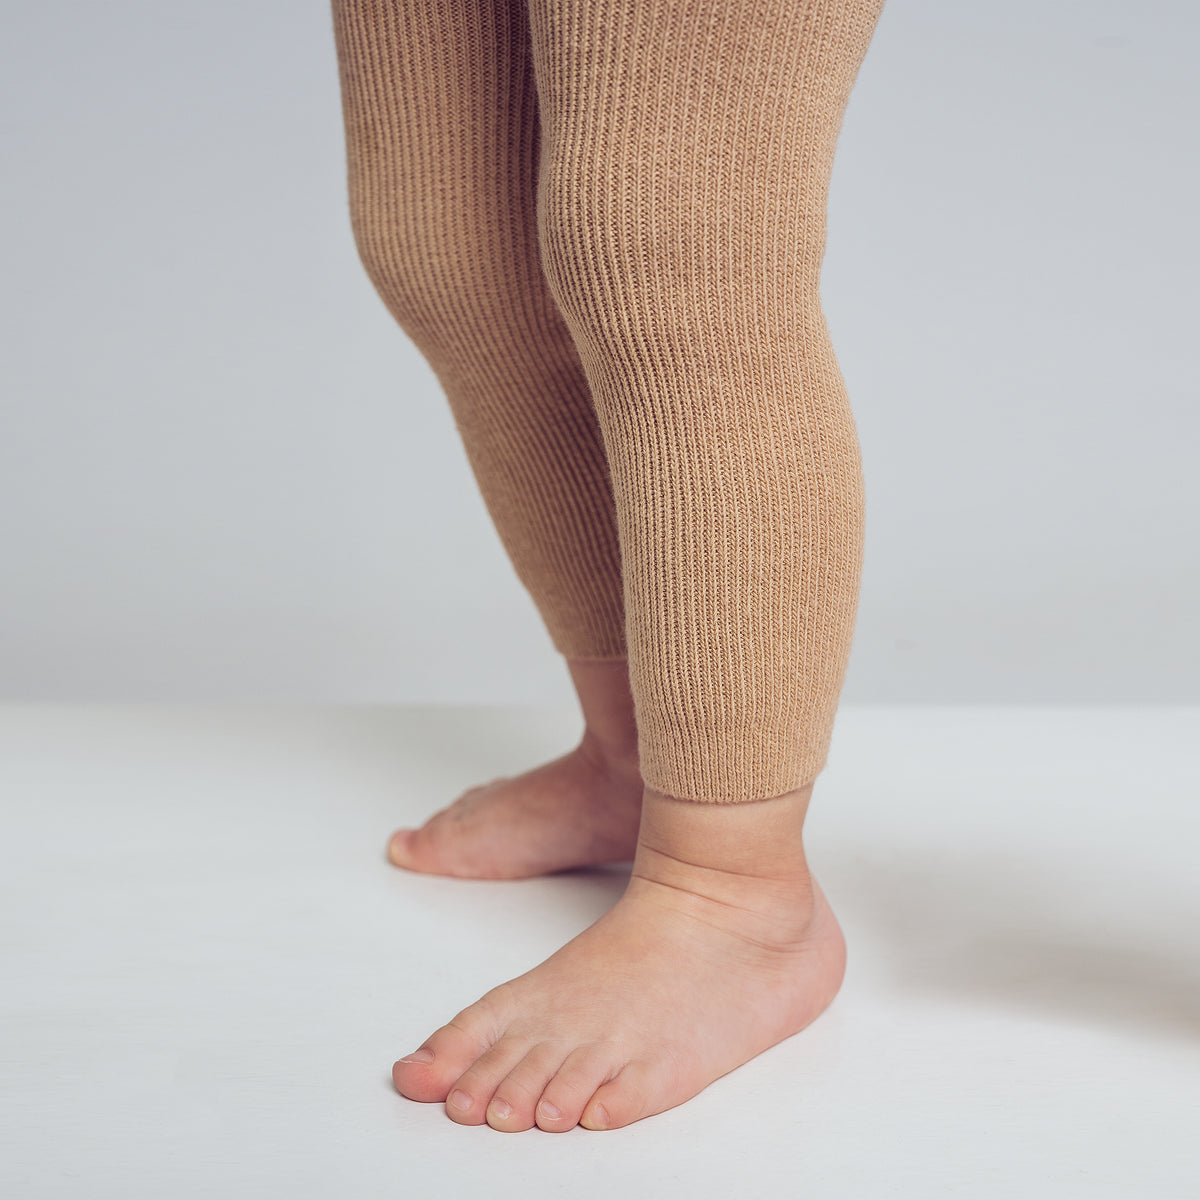 PEQNE Leggings Footless Tights with Braces in Beige Brown